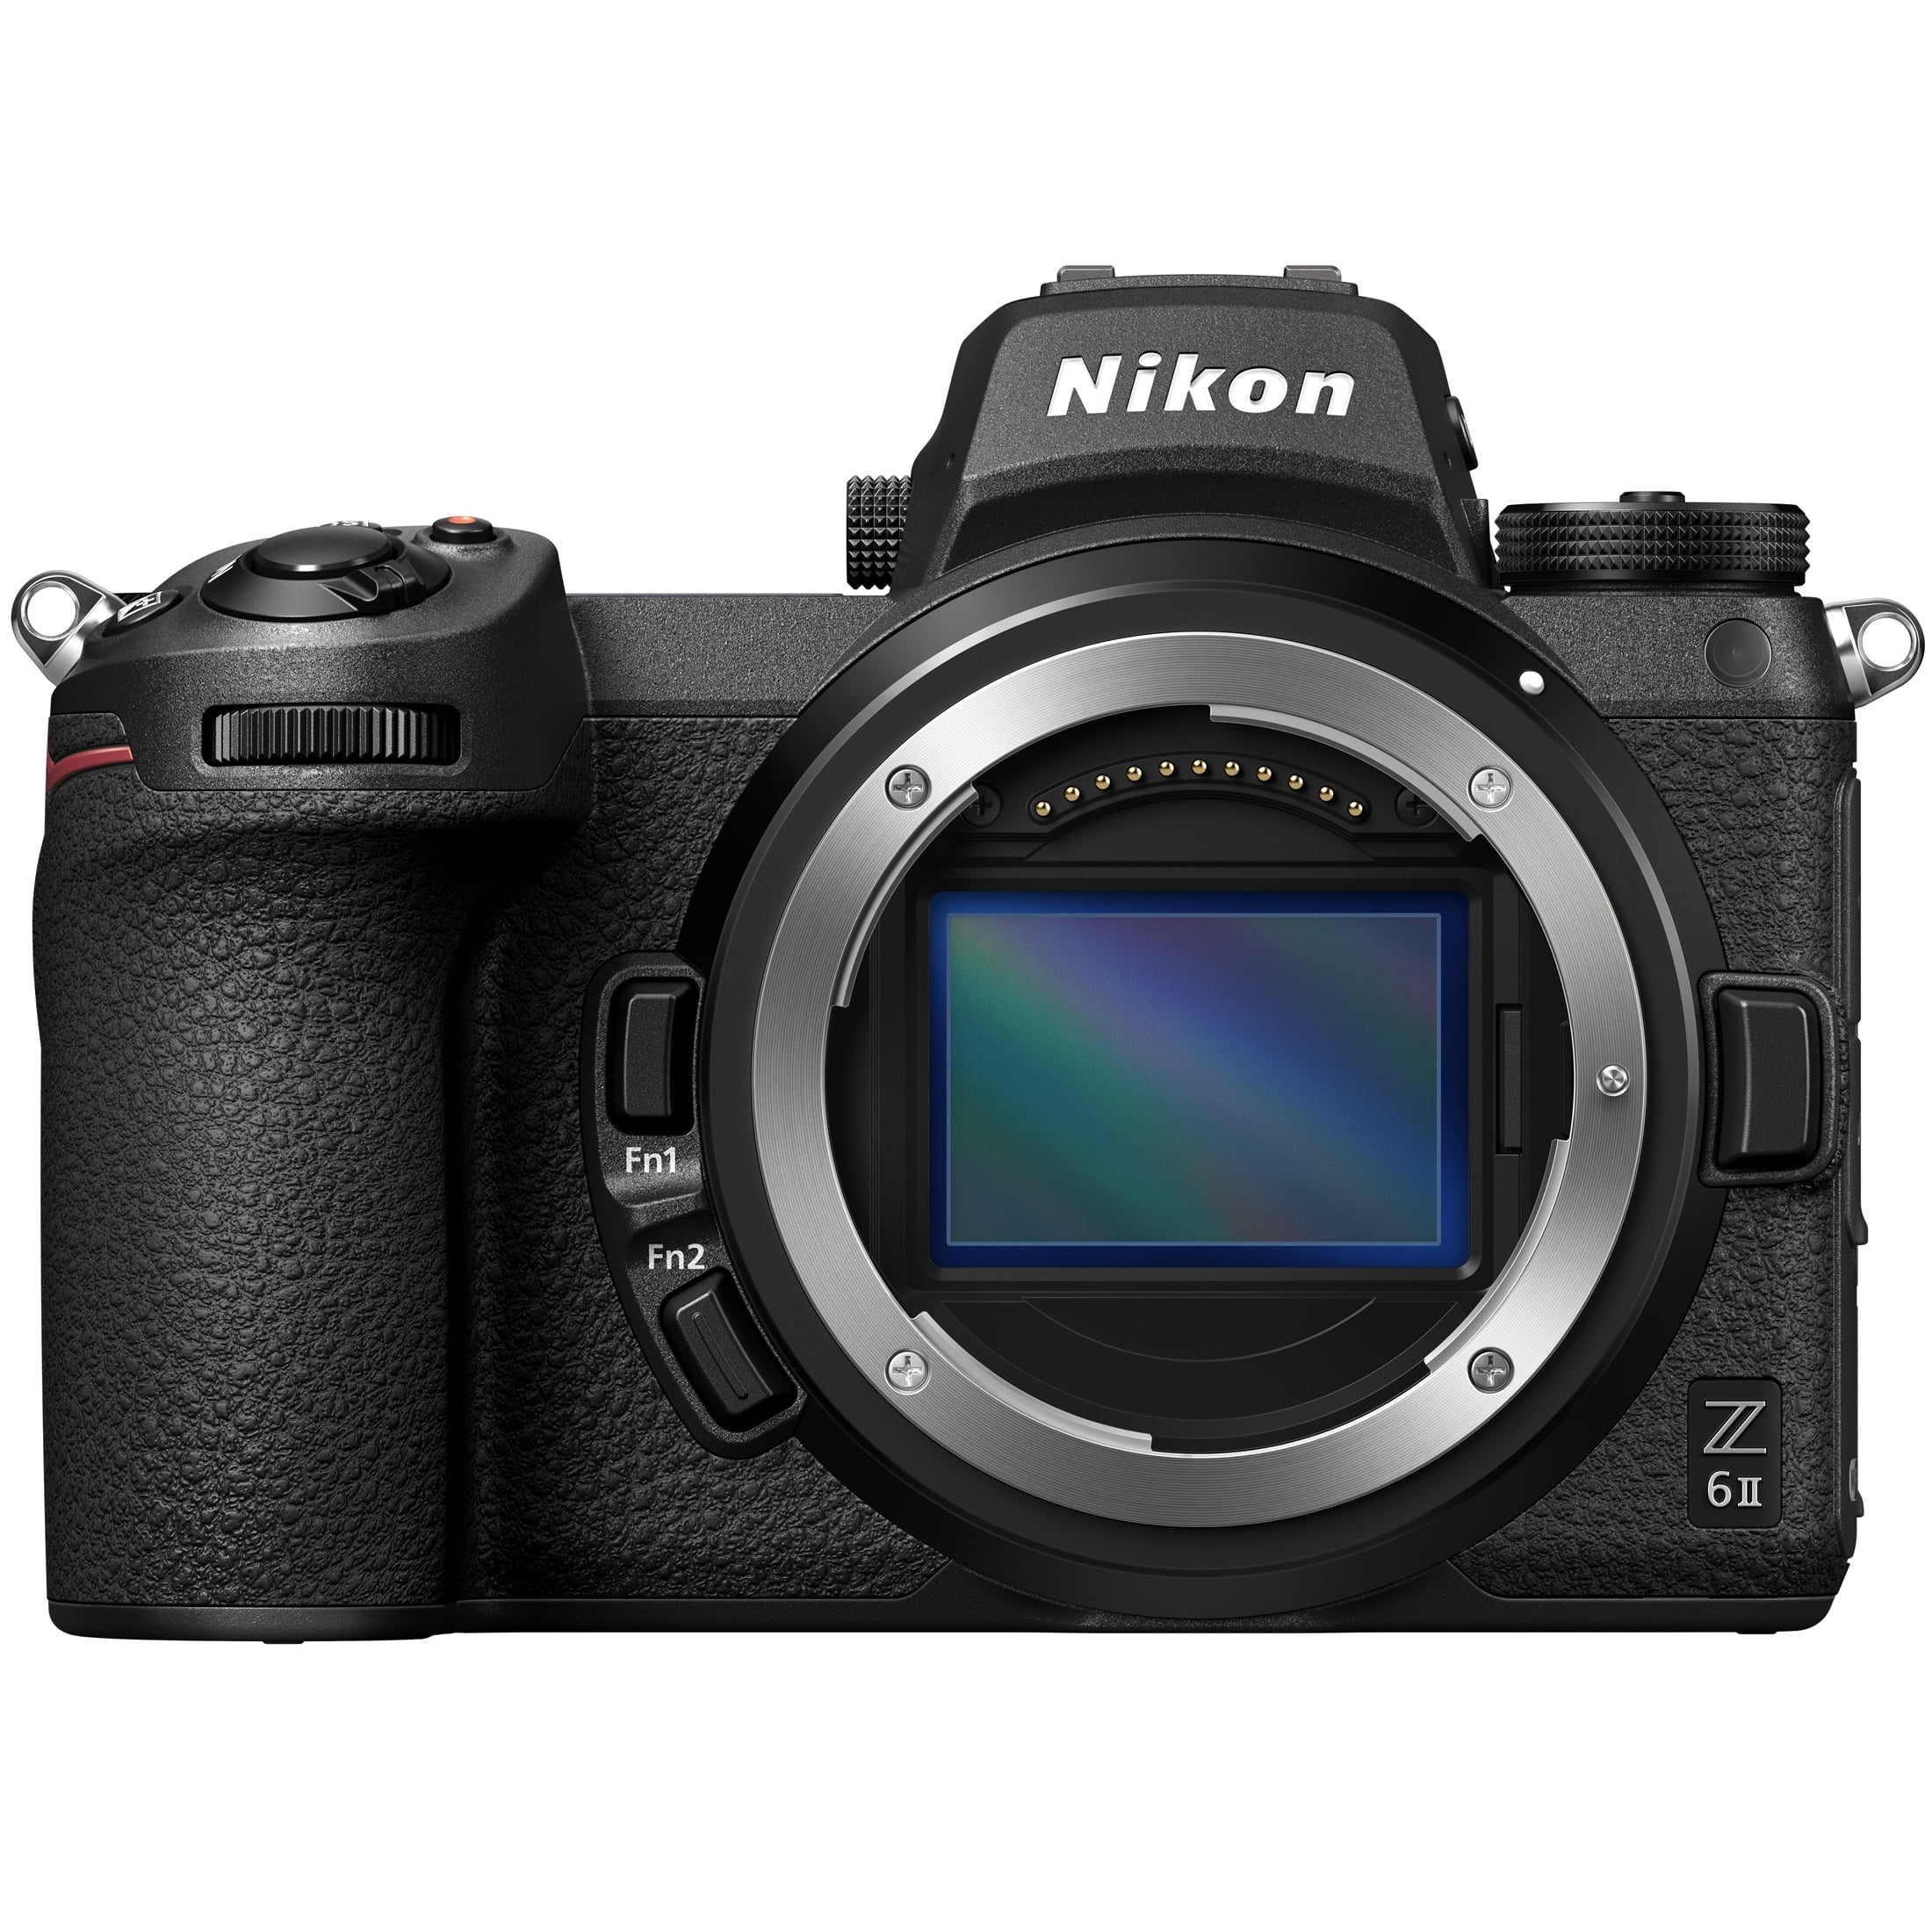 Frame Full 1659 Only Camera Mirrorless 24.5MP FX-Format Nikon Z6II Body